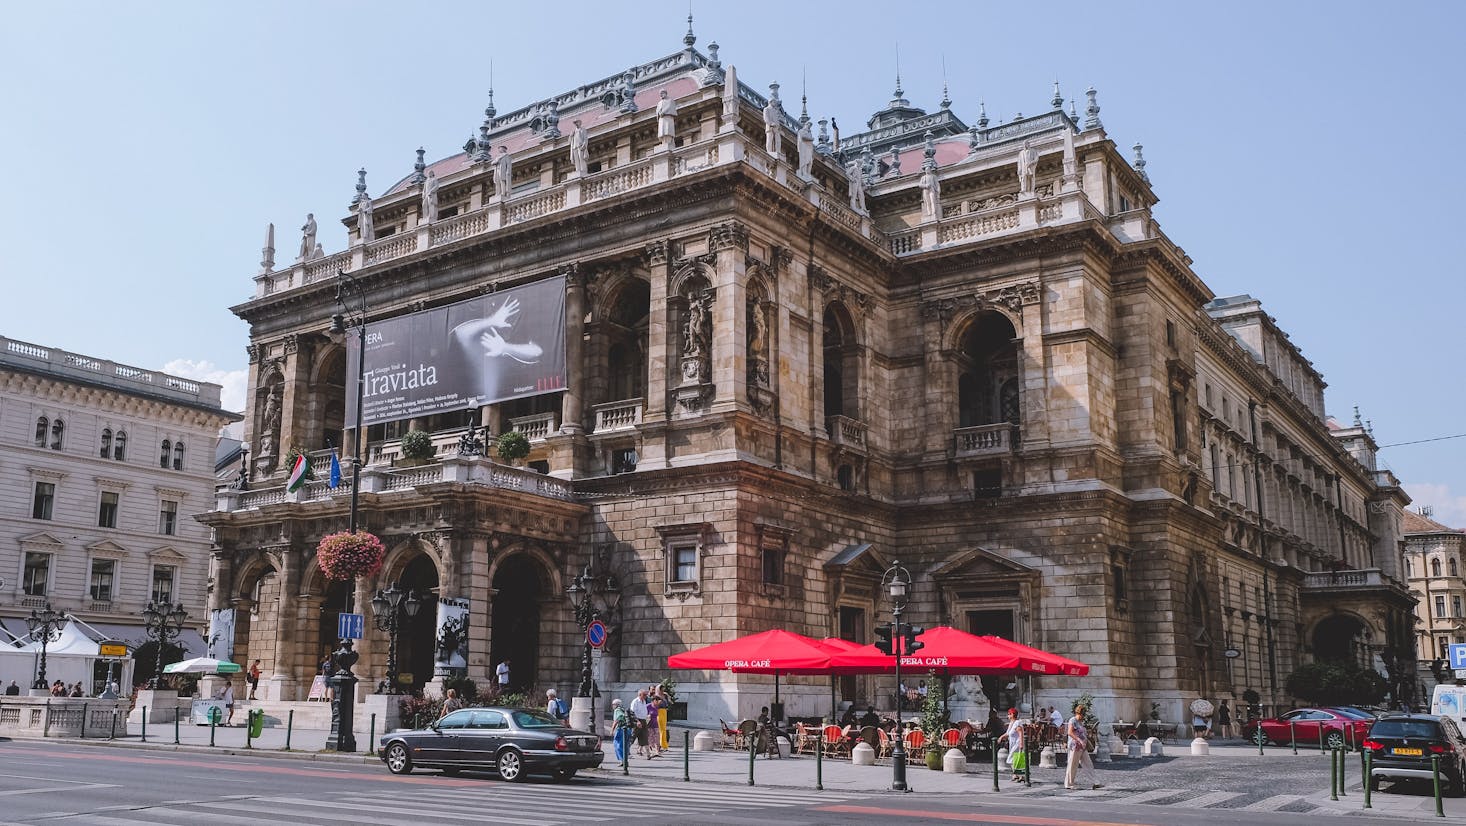 Budapest Opera House